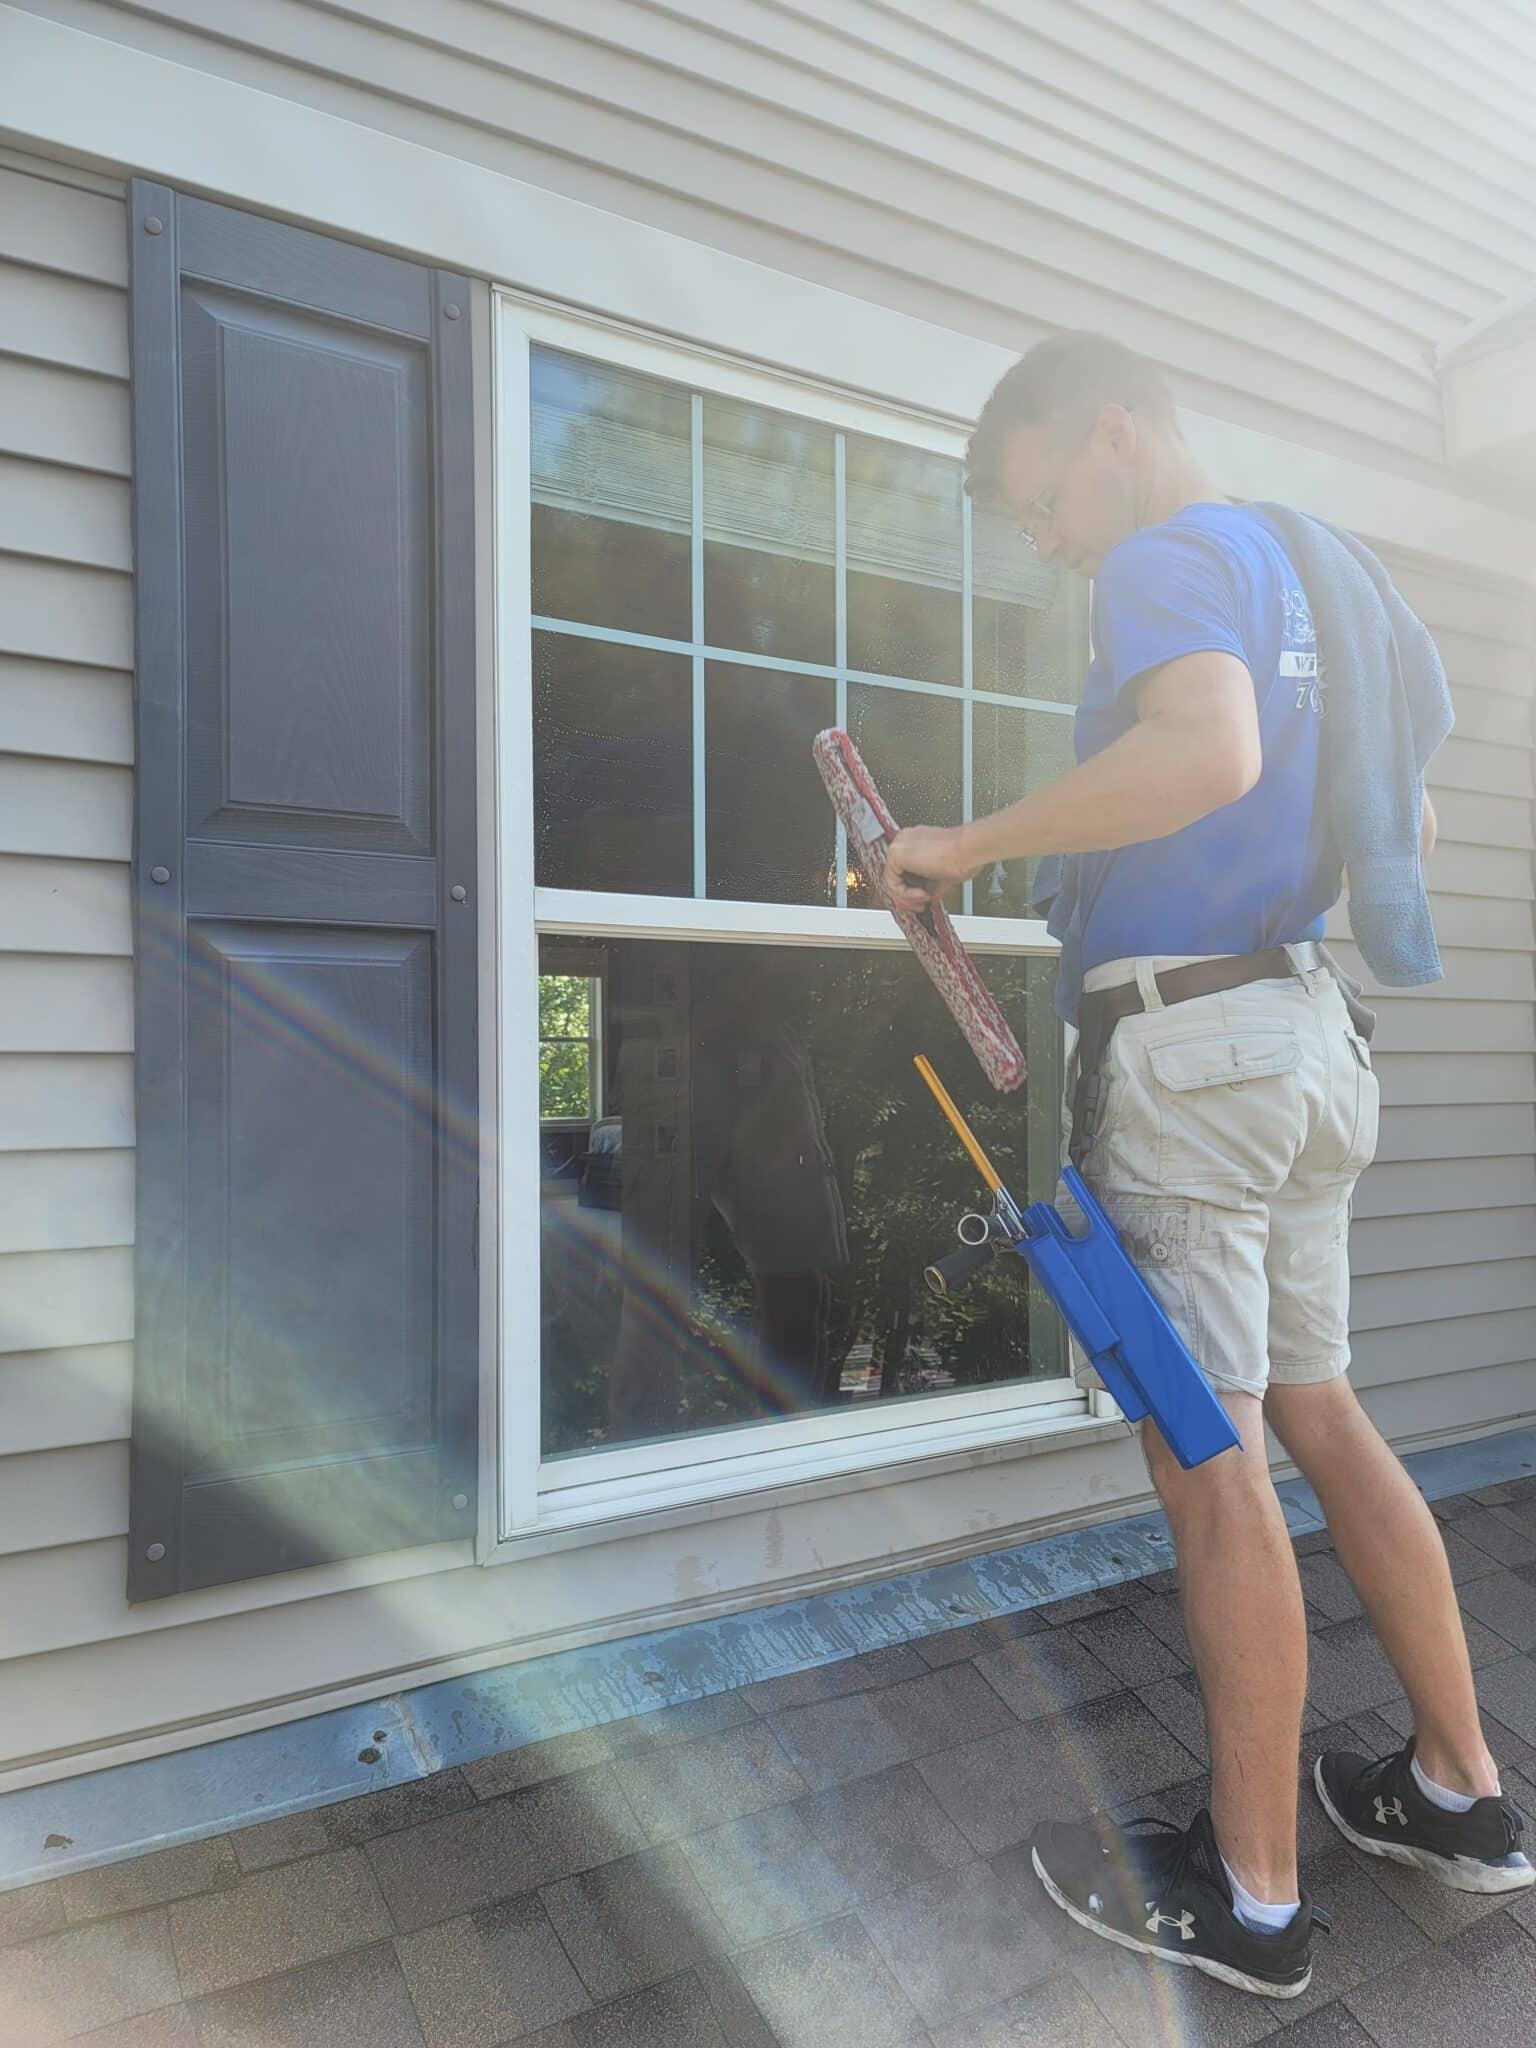 Genlabs Squeegee Window Cleaner – Window Magic Supply